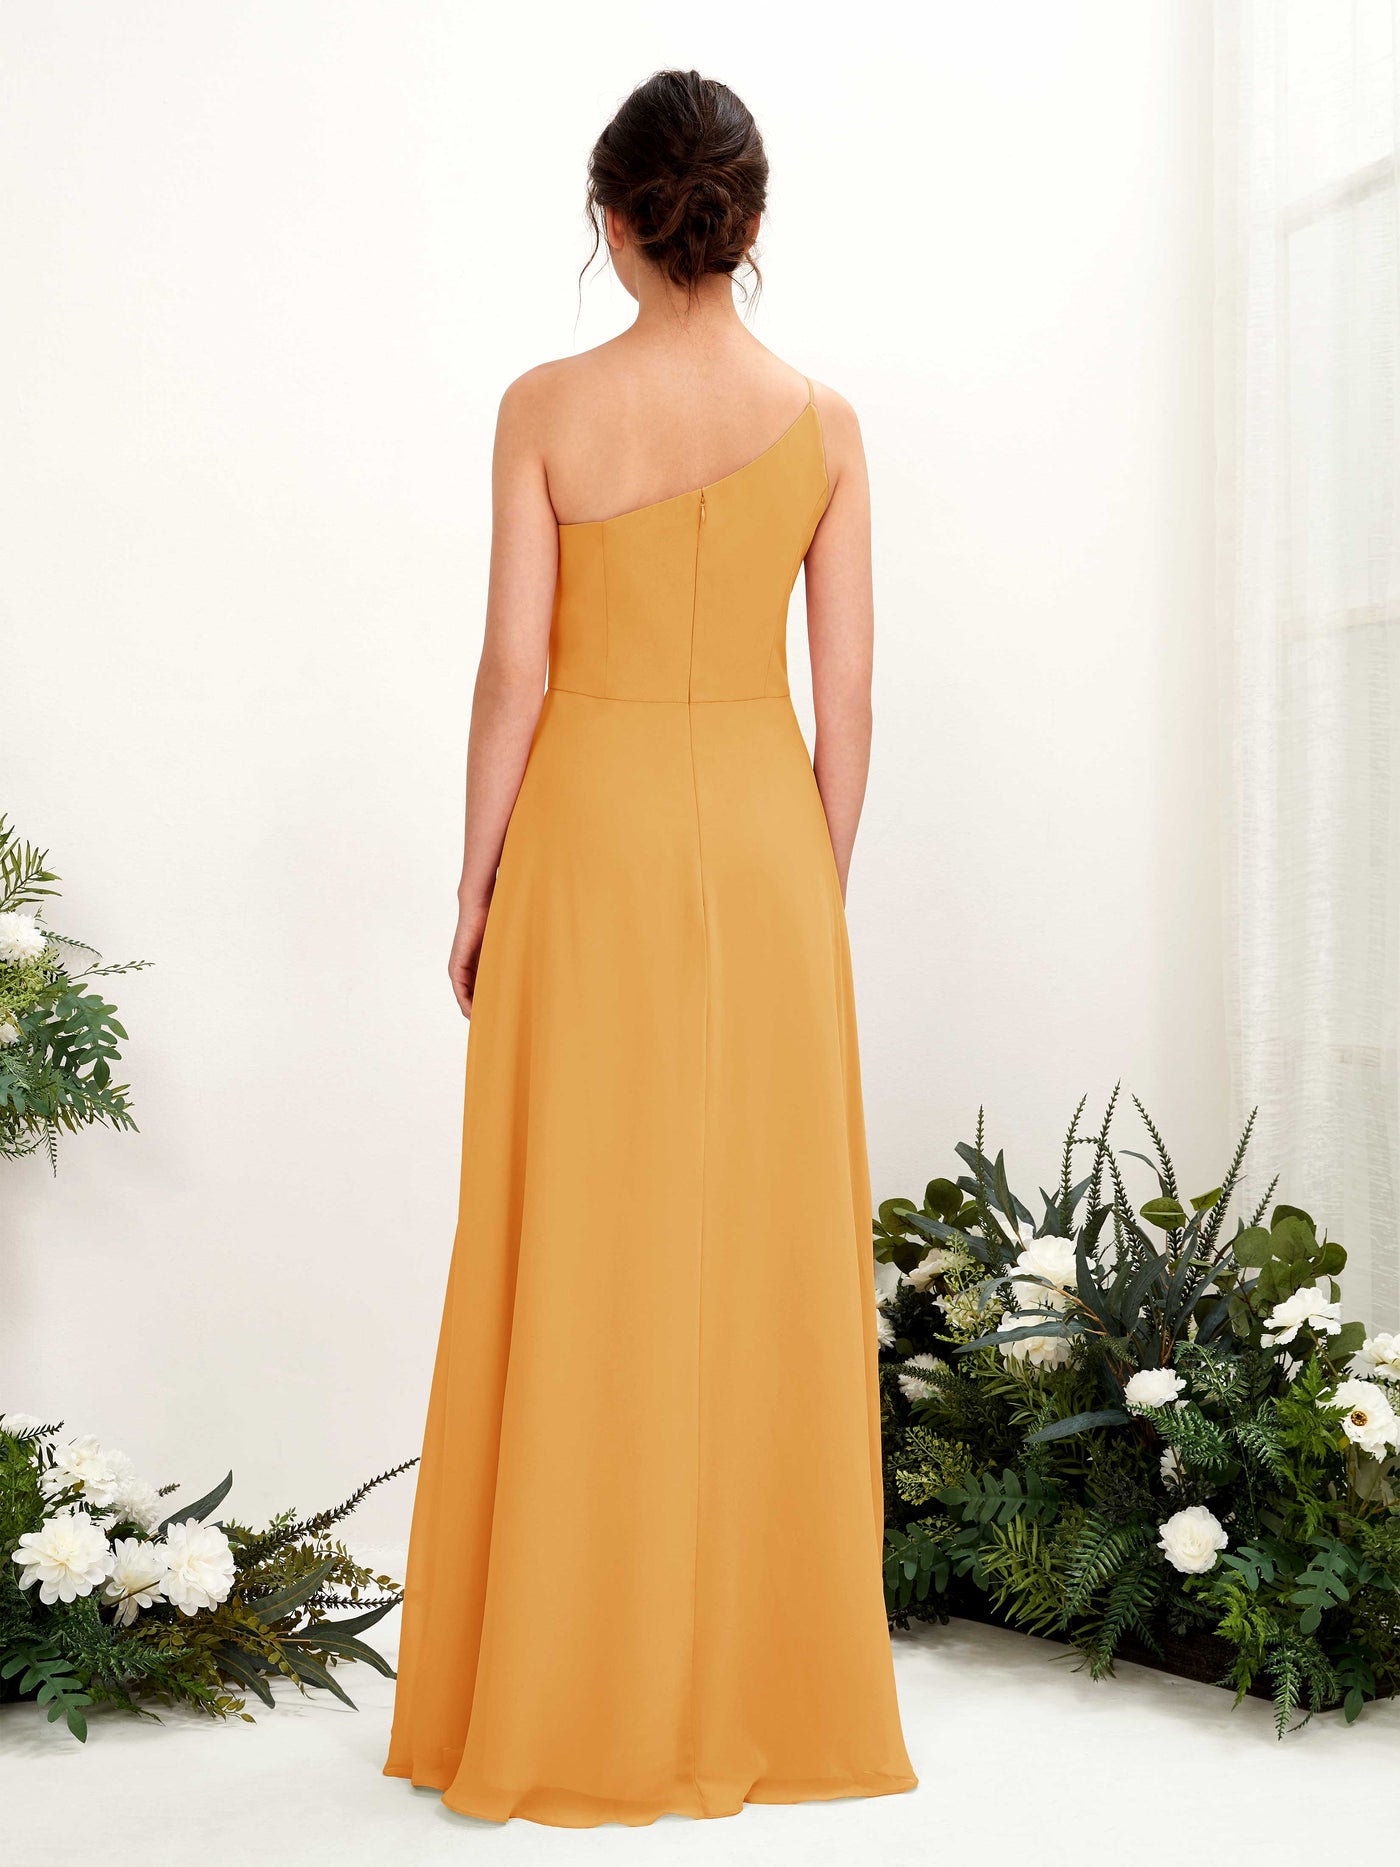 Mango Bridesmaid Dresses Bridesmaid Dress A-line Chiffon One Shoulder Full Length Sleeveless Wedding Party Dress (81225702)#color_mango